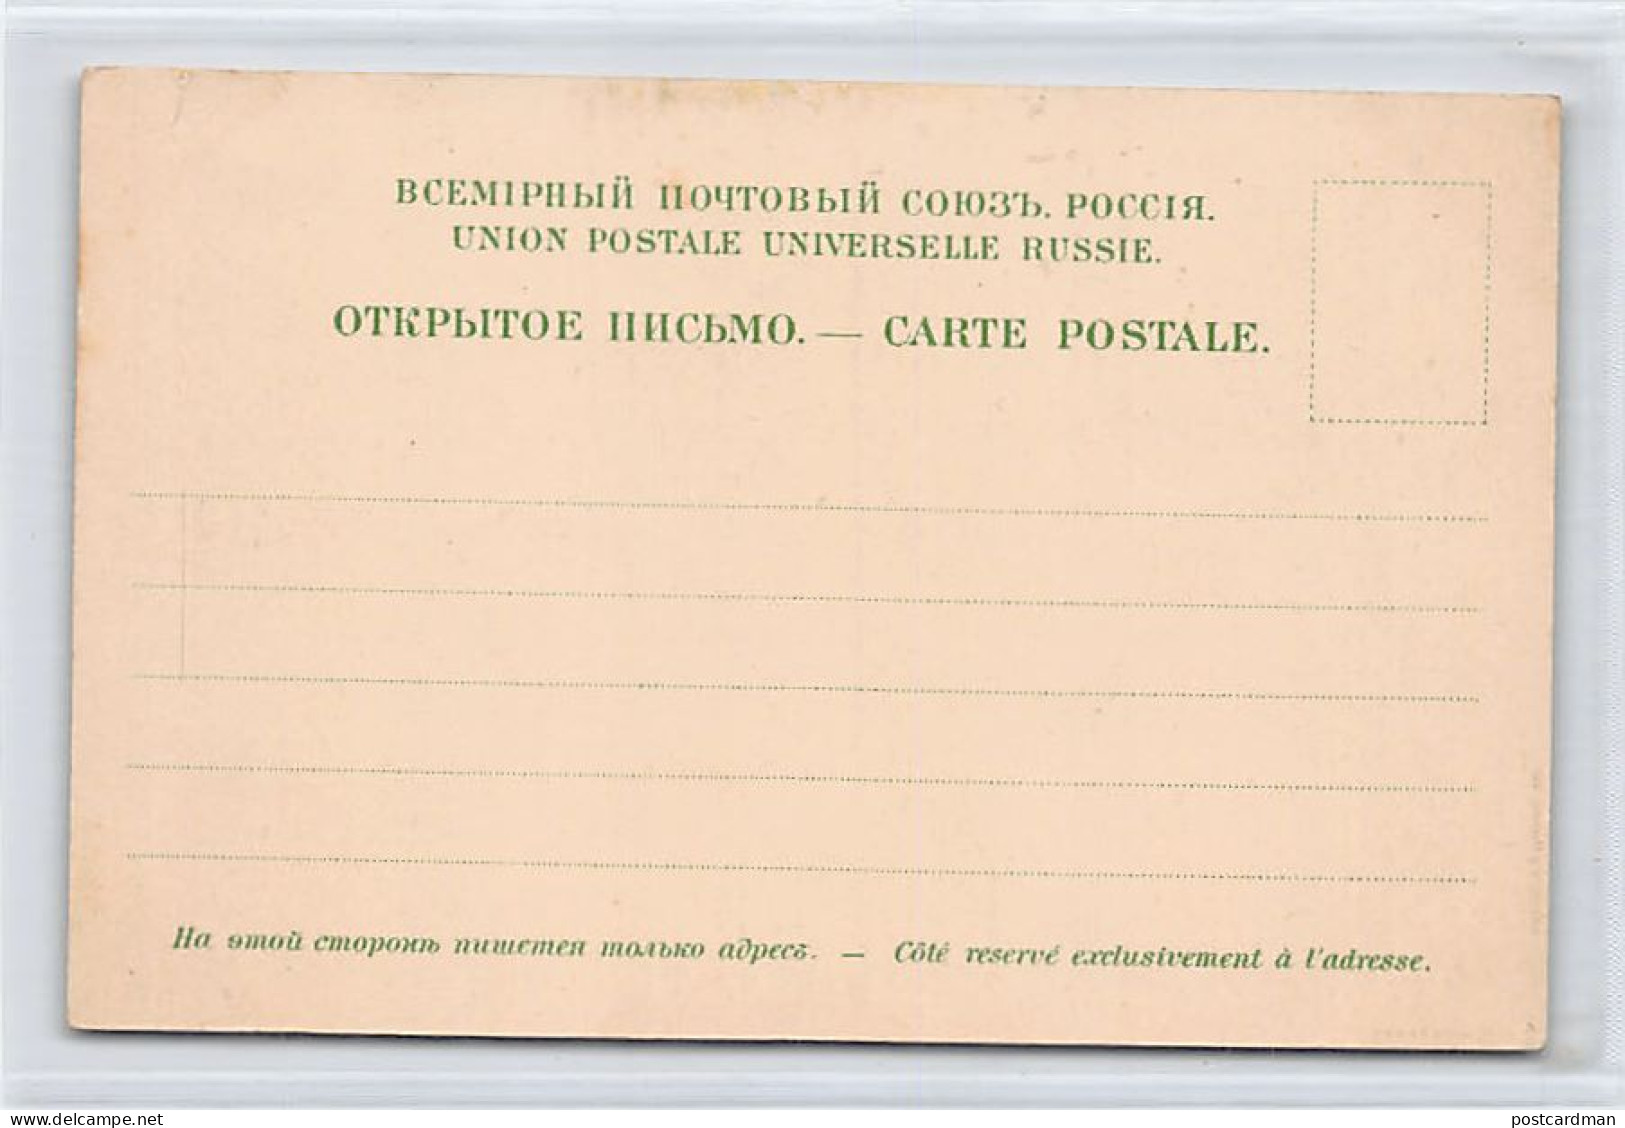 Azerbaijan - BAKU - Litho Postcard - Ramana Oil Wells - Local Type - Publ. F.I.Shreiber  - Aserbaidschan